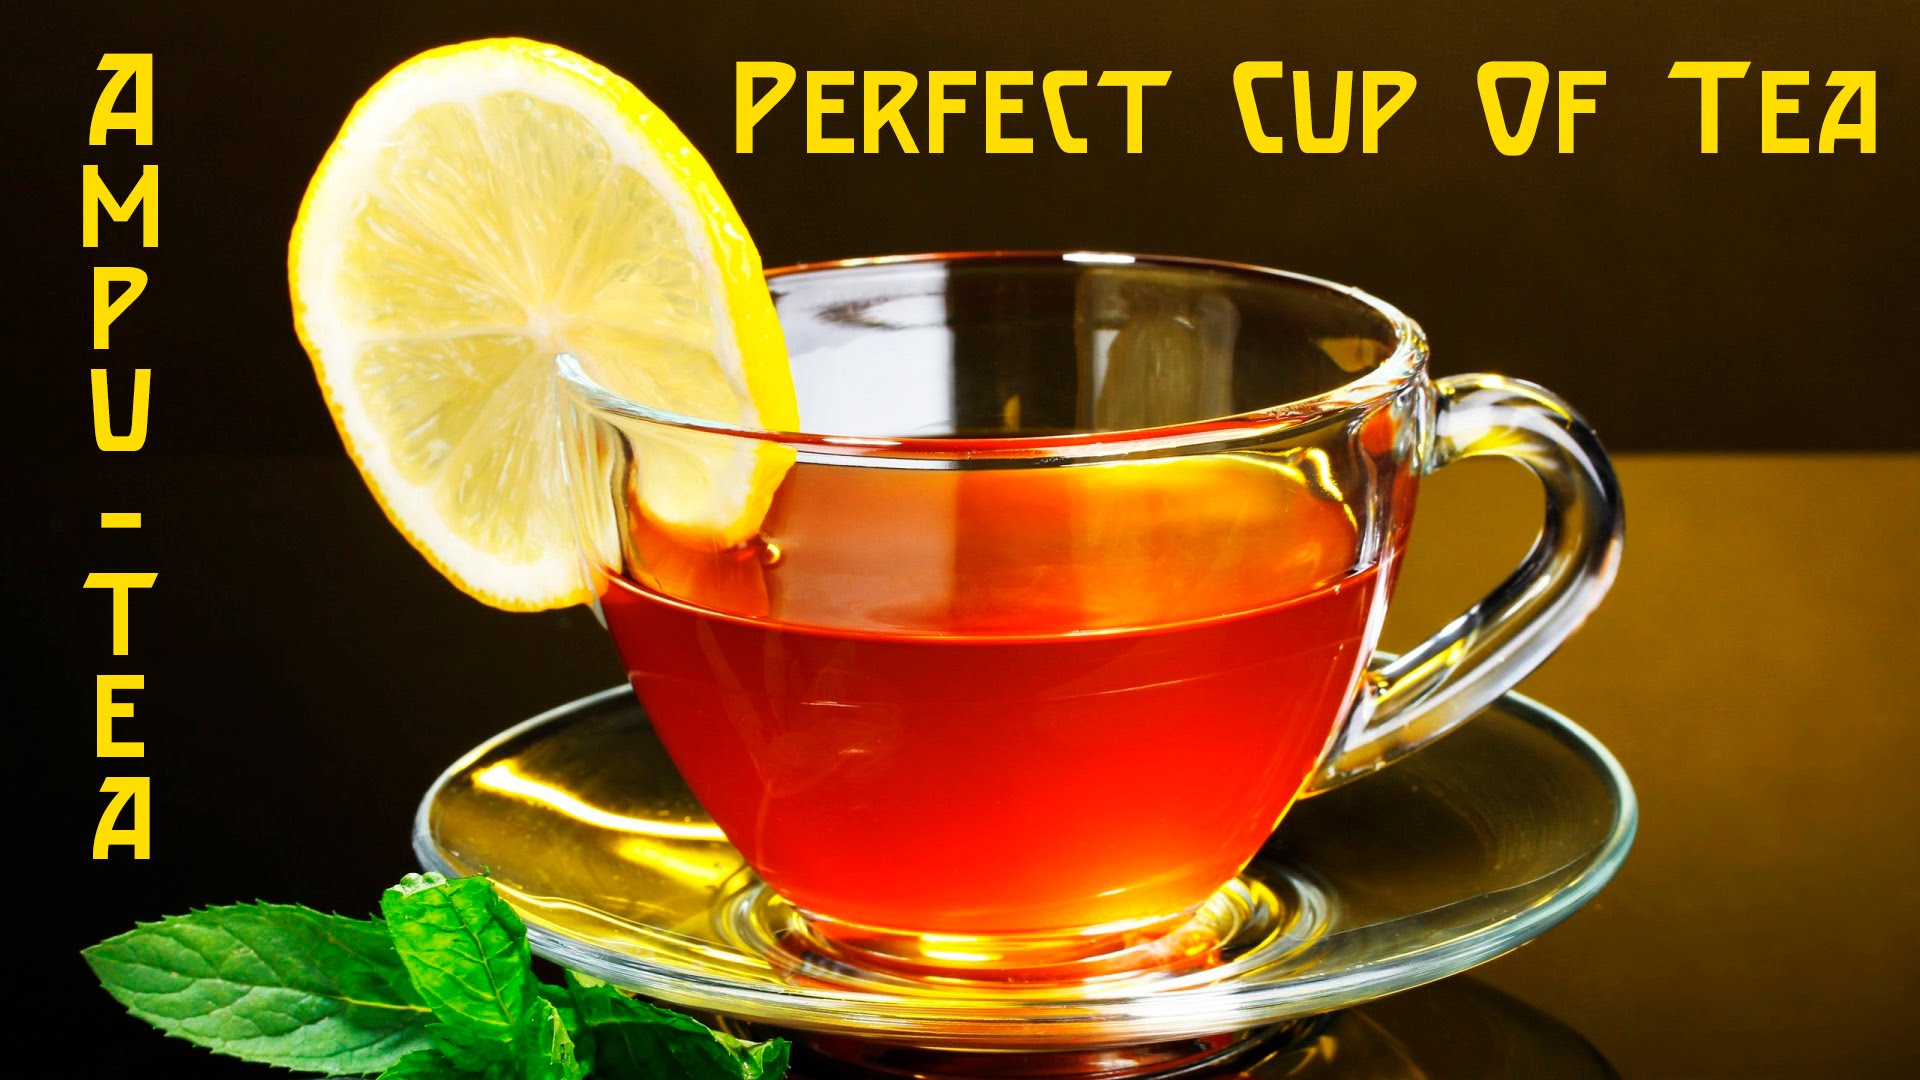 Ampu-Tea - Perfect cup of tea (